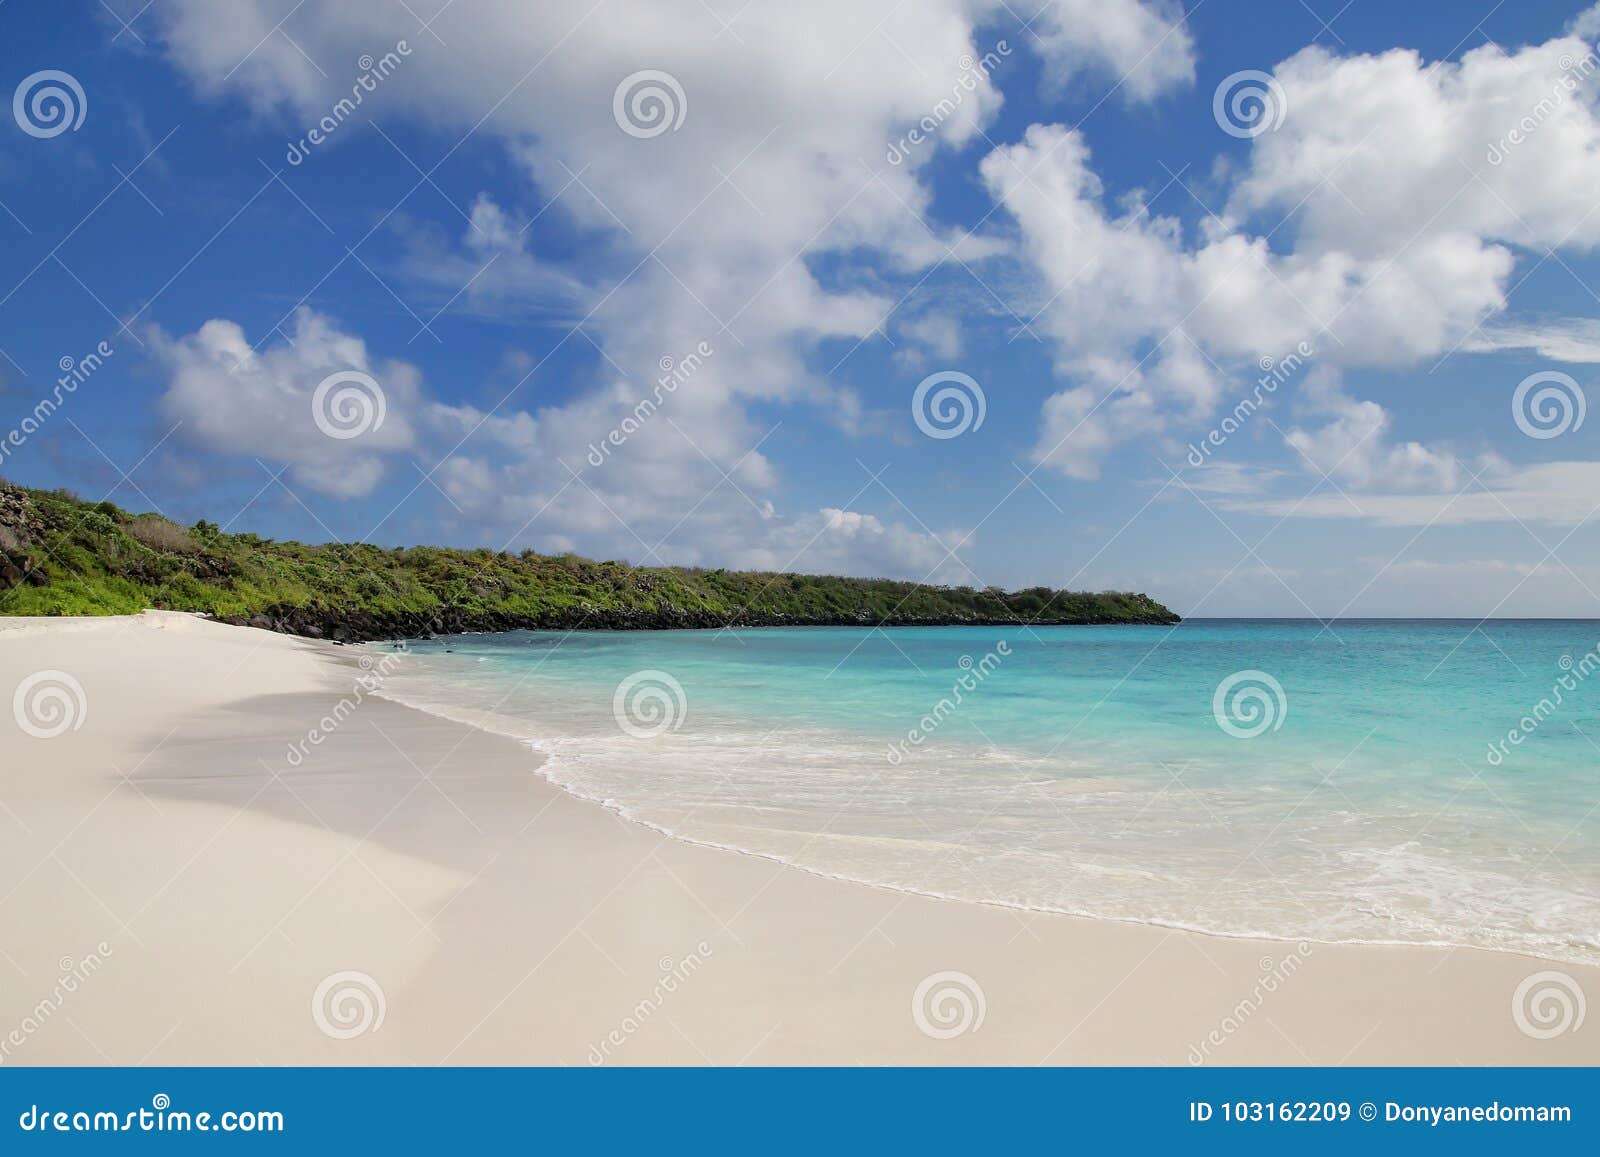 sandy beach at gardner bay, espanola island, galapagos national